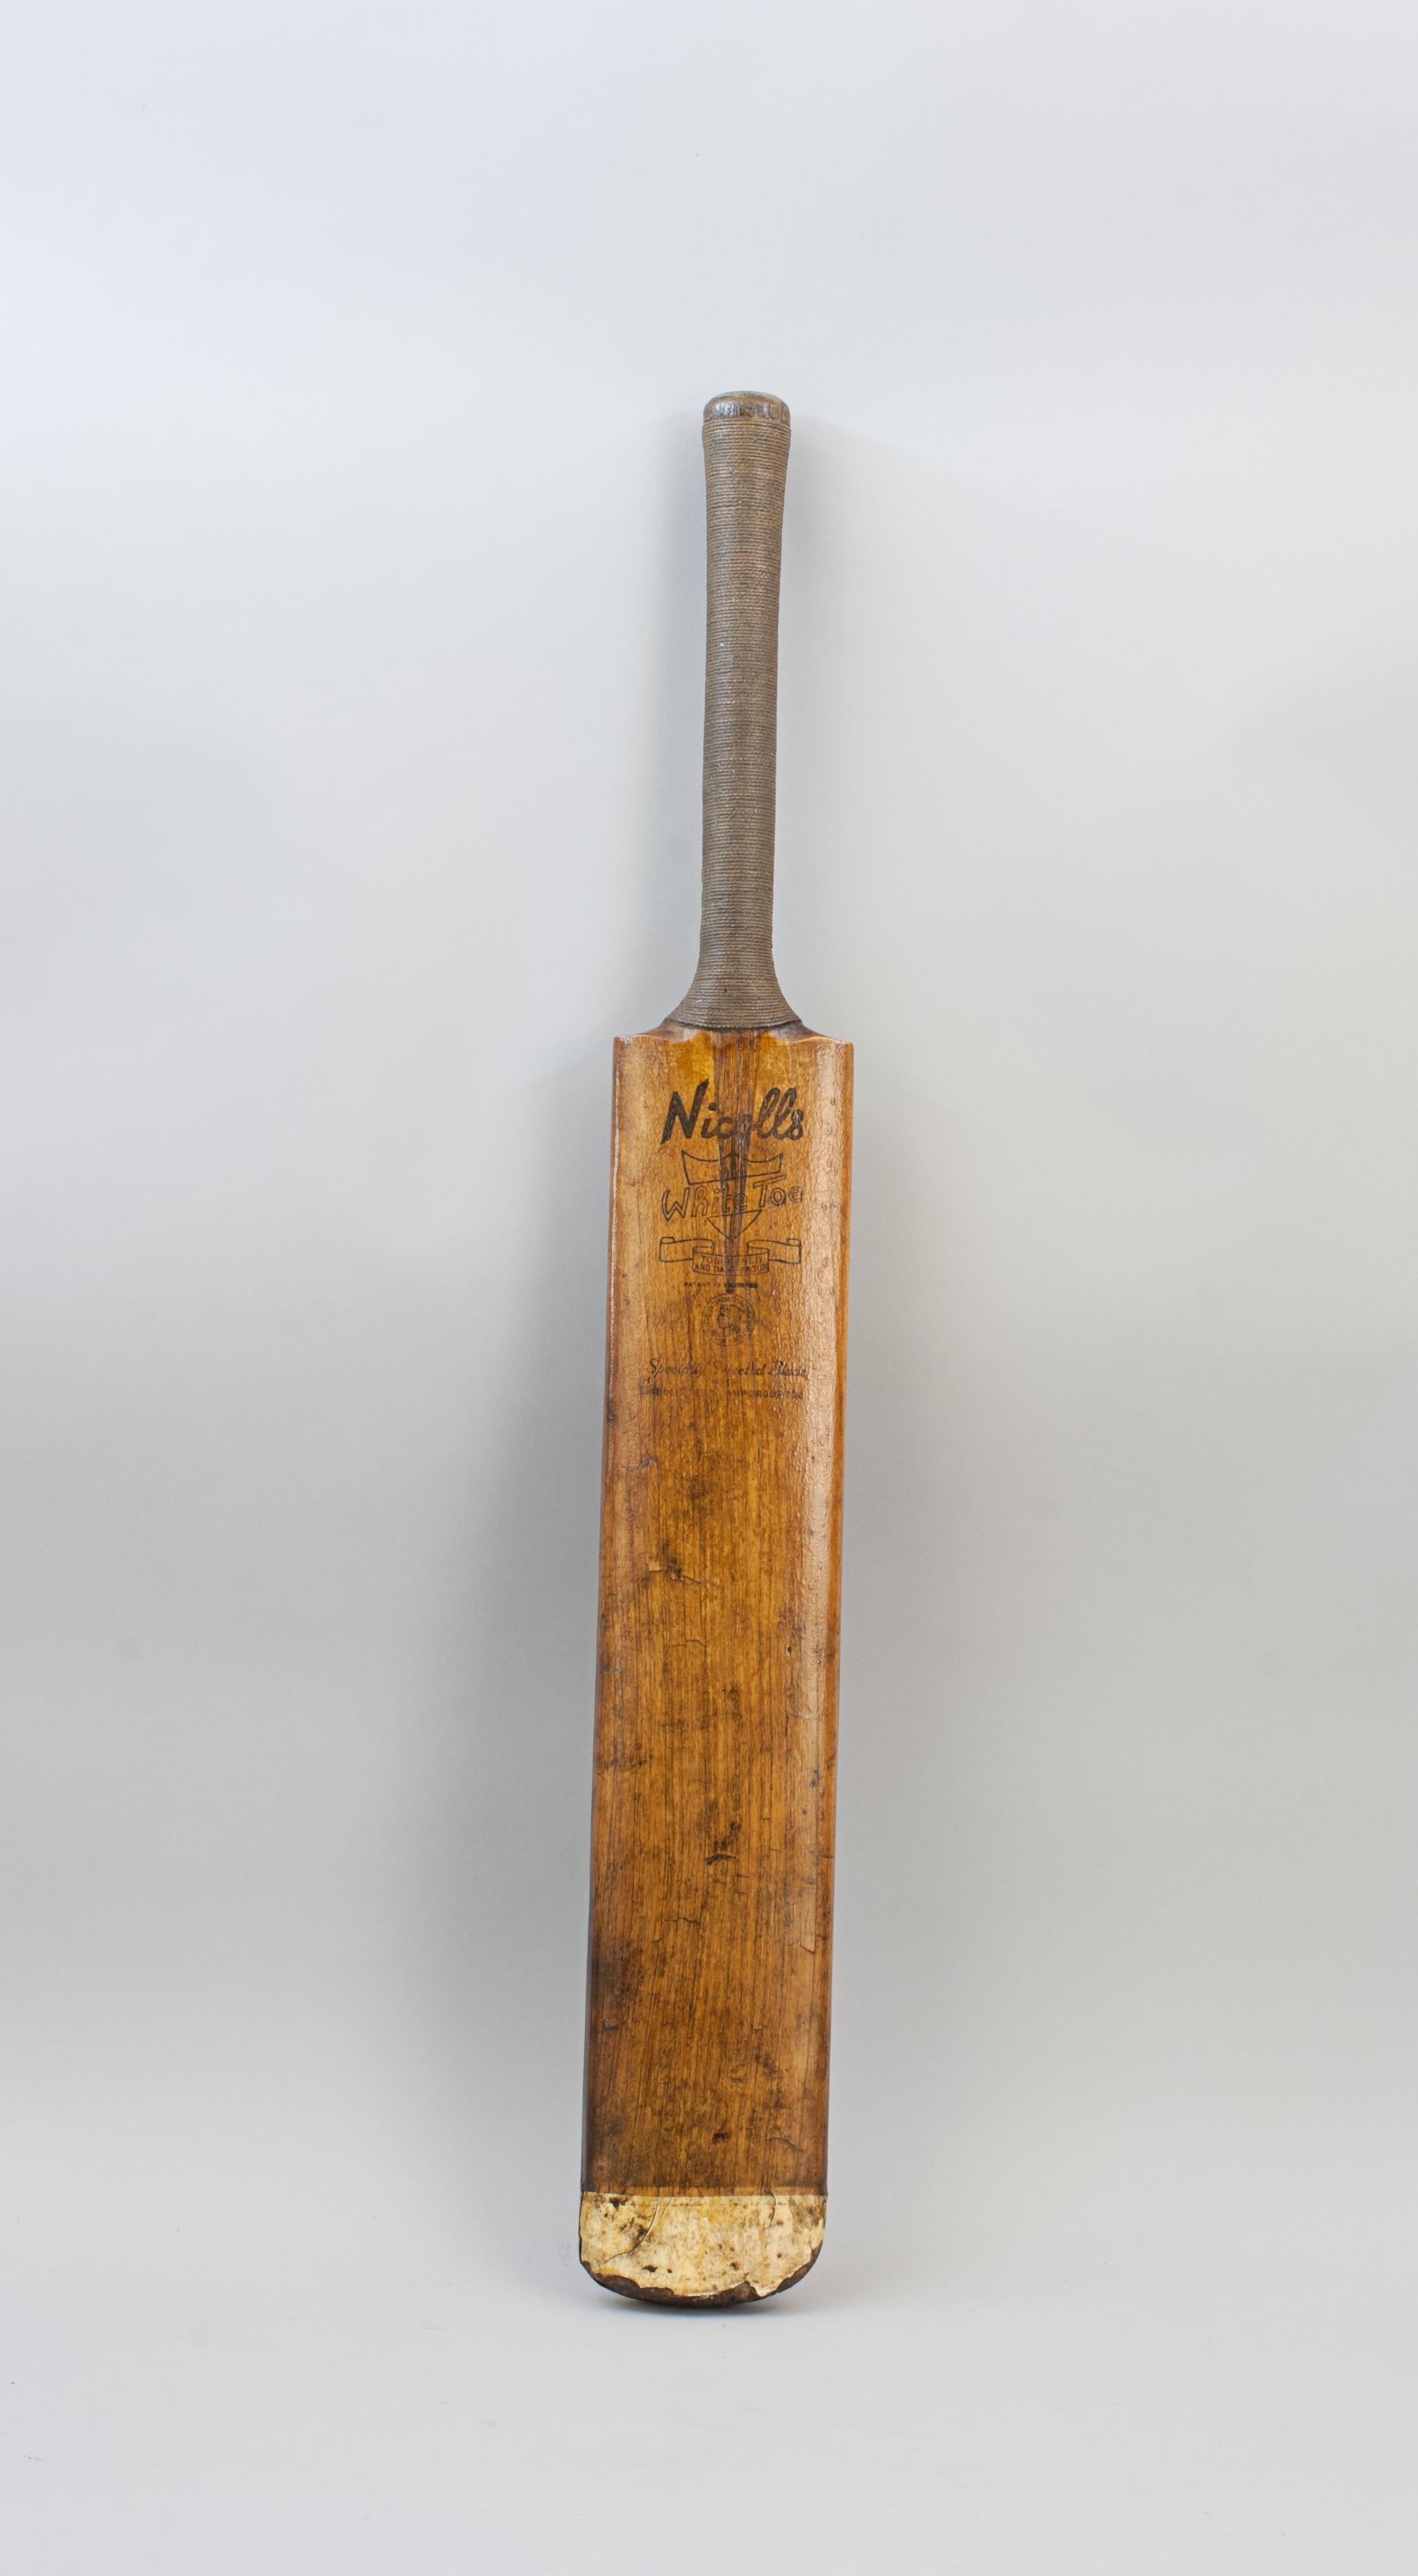  Vintage Cricket Bat, Nicolls 'White Toe' For Sale 5